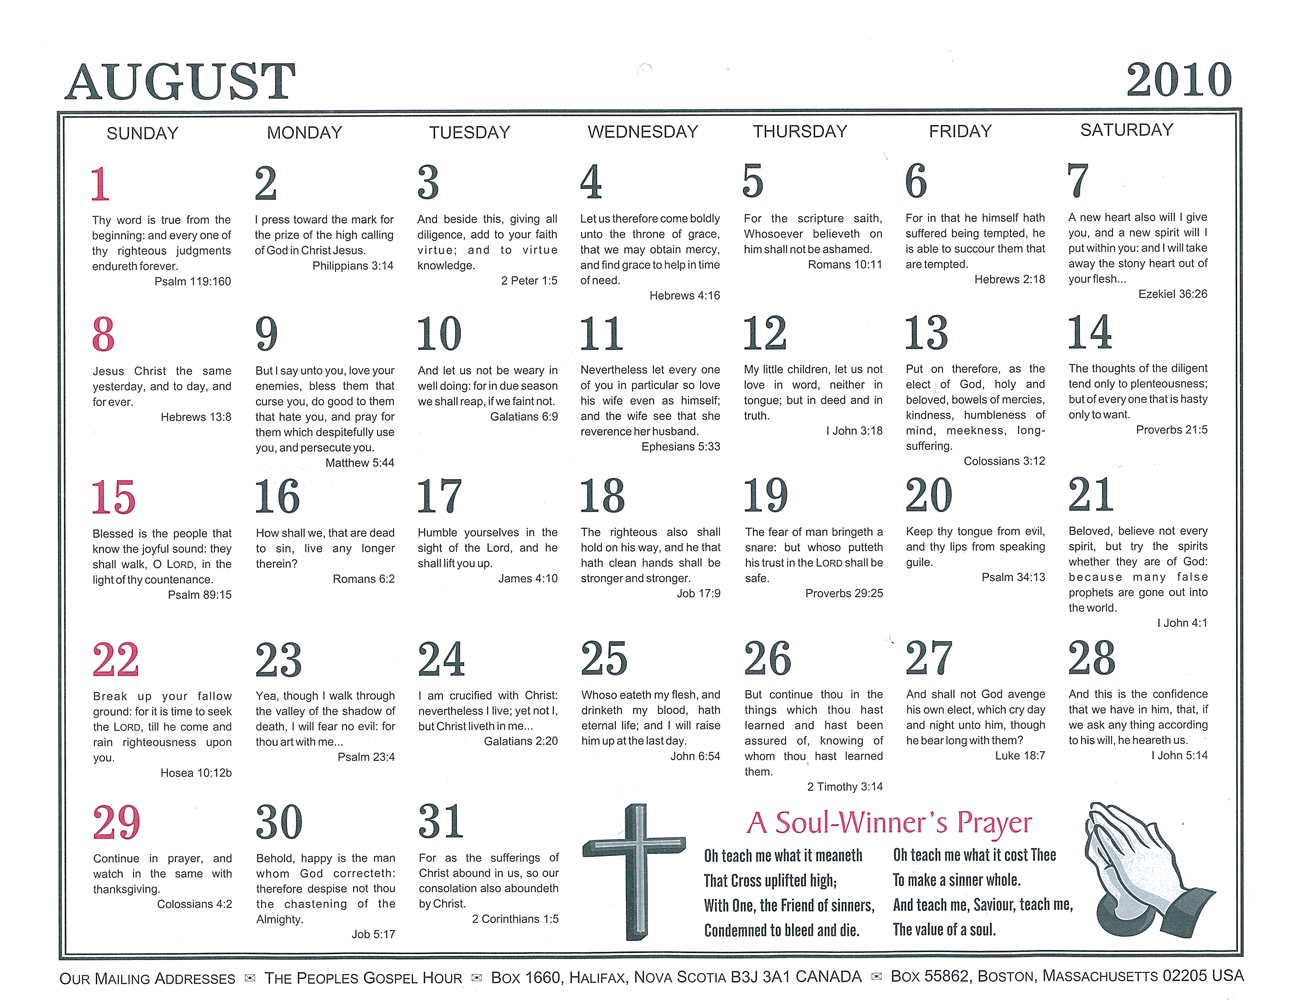 August: 2010 The Peoples Gospel Hour Calendar